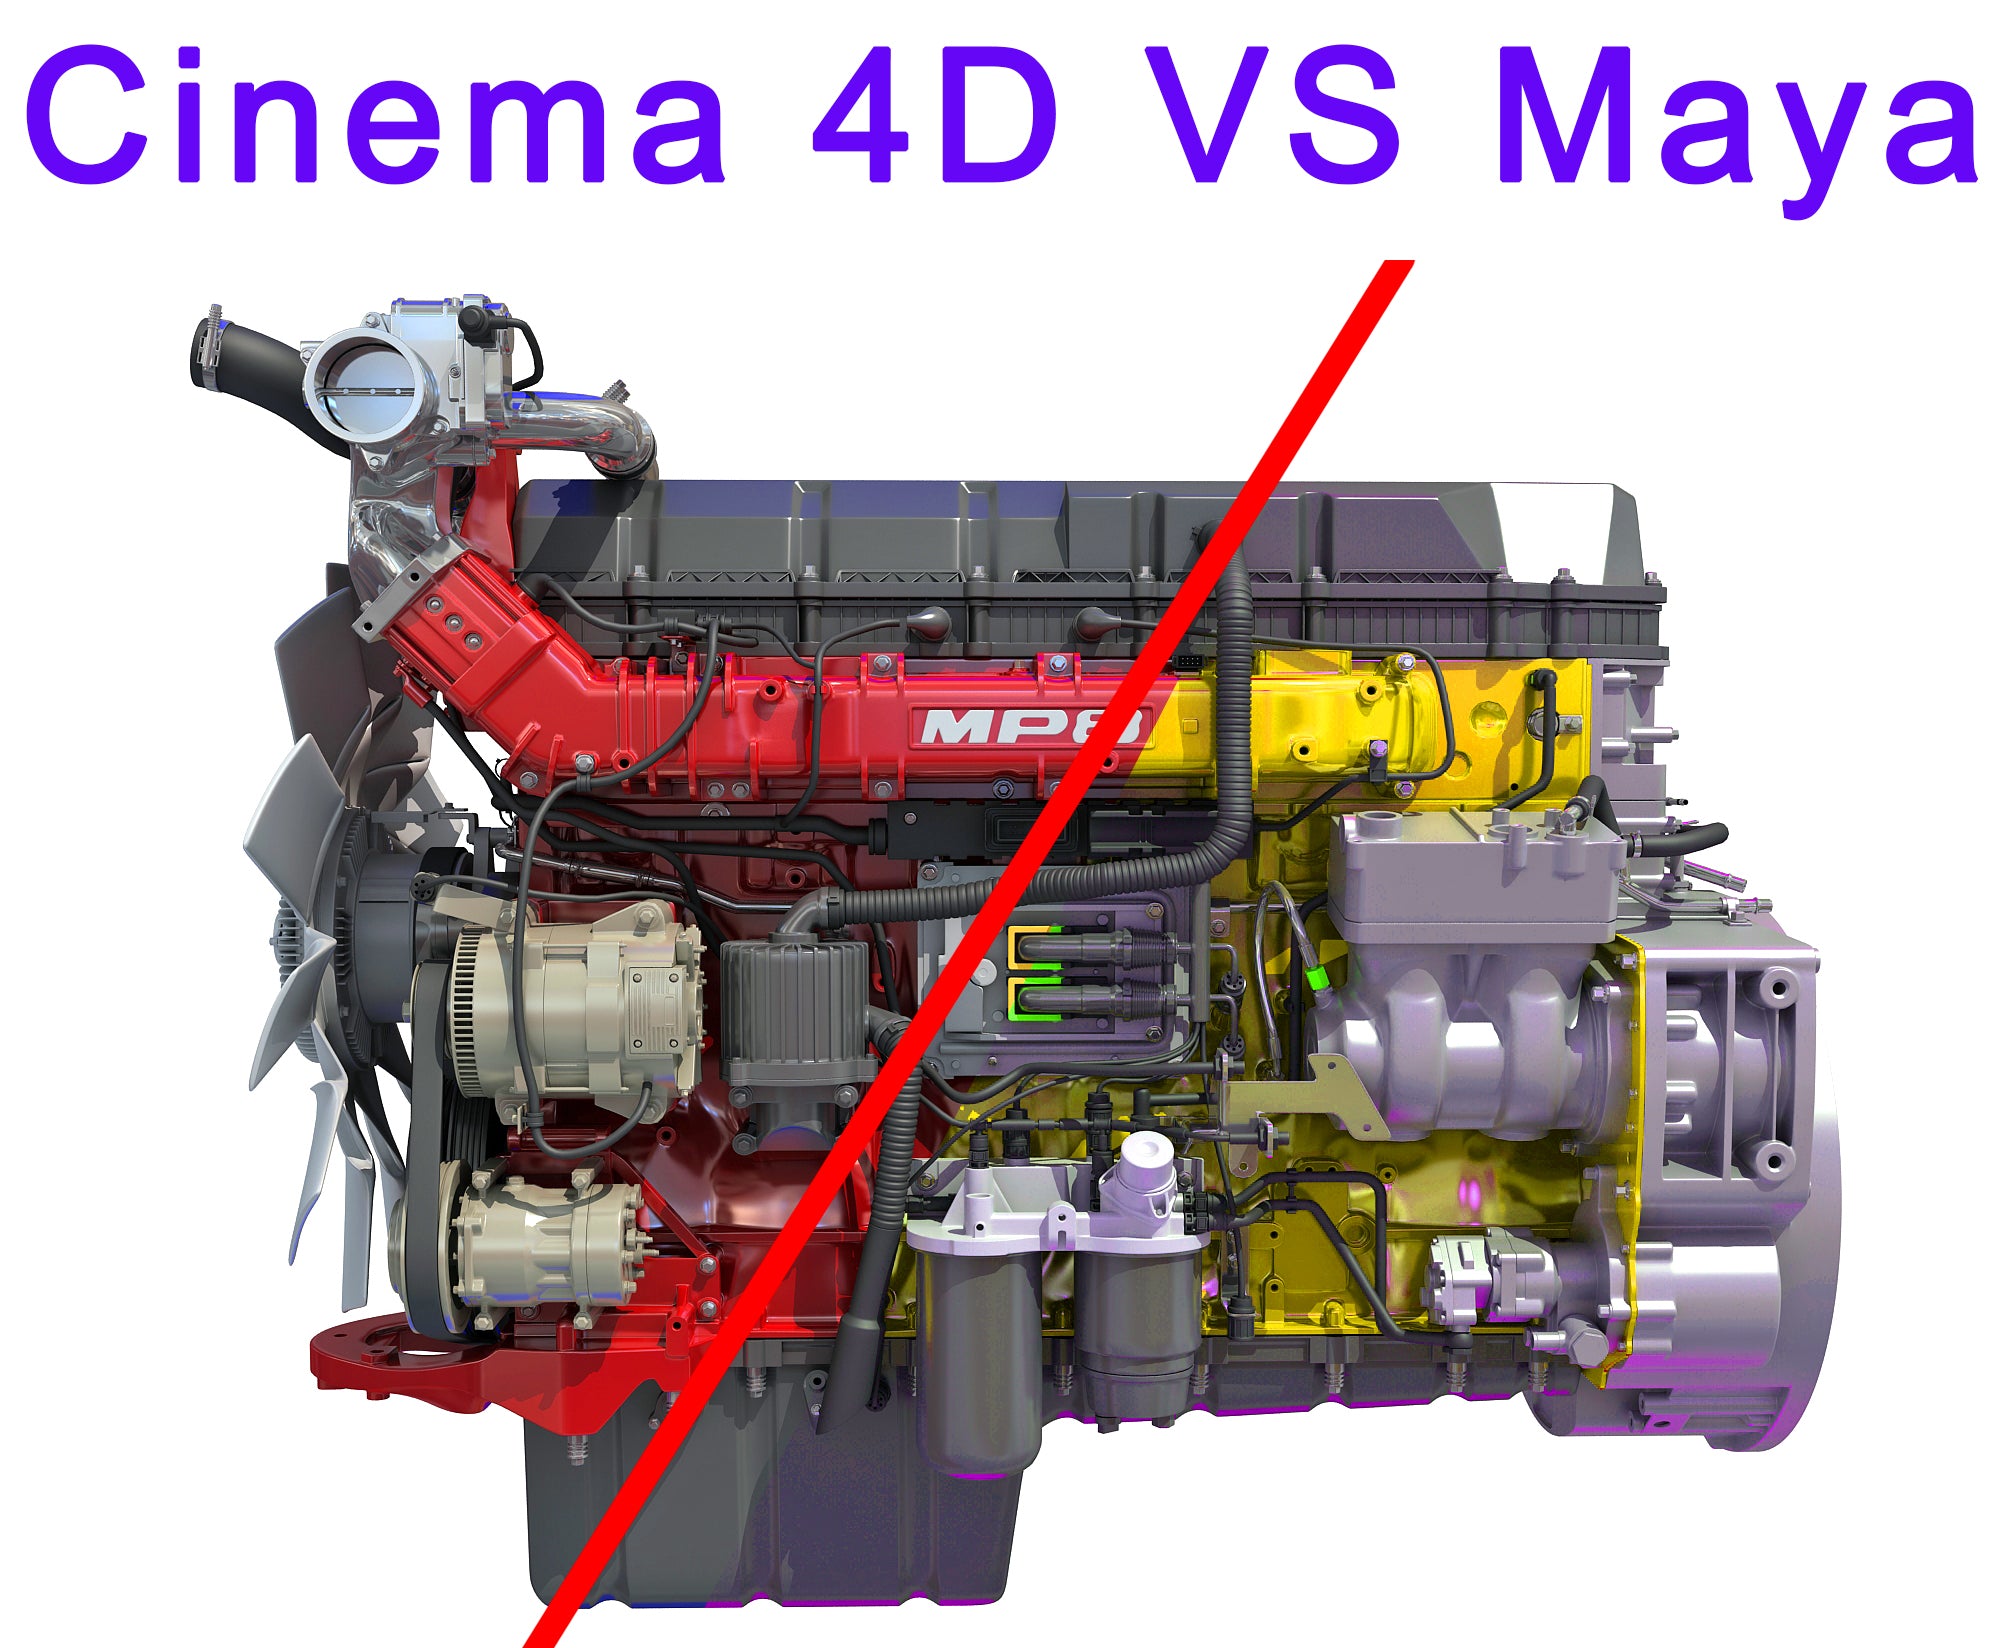 Cinema 4D VS Maya – Which Is Better